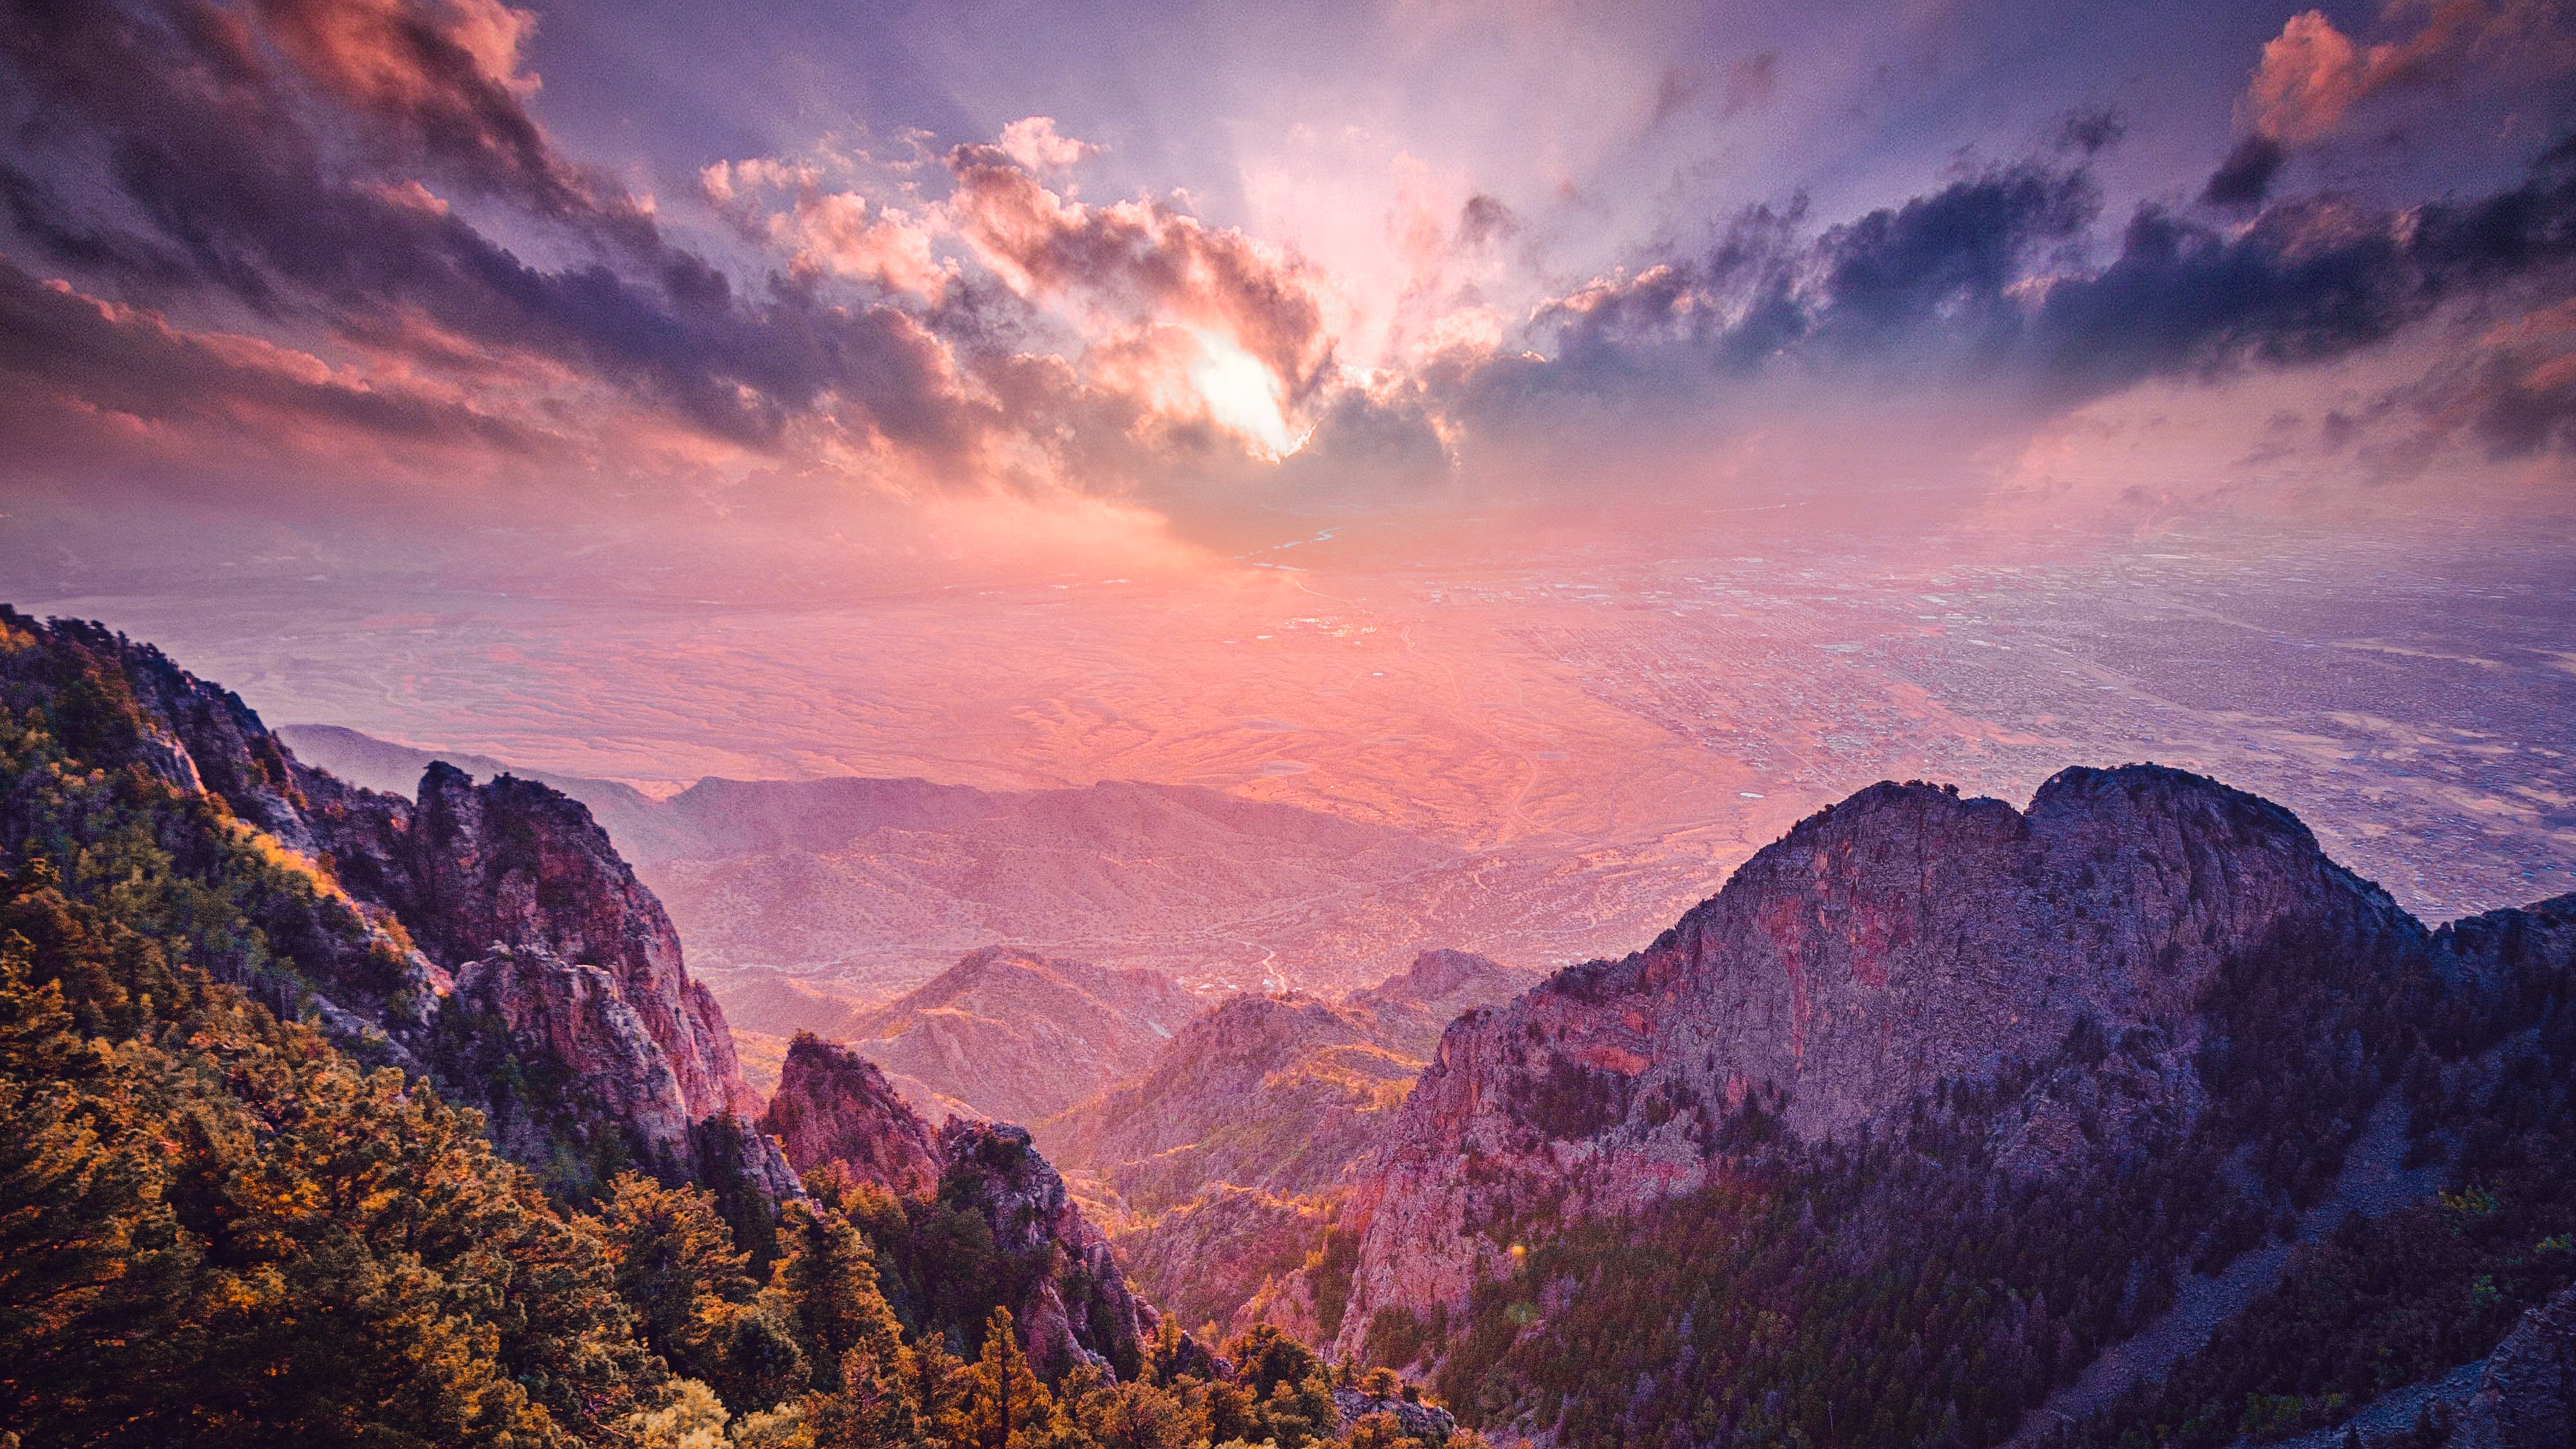 HD wallpaper, Landscape, Cloudy Sky, Mountain Peaks, Sunset, 8K, Scenic, , 5K, Summit, Aerial View